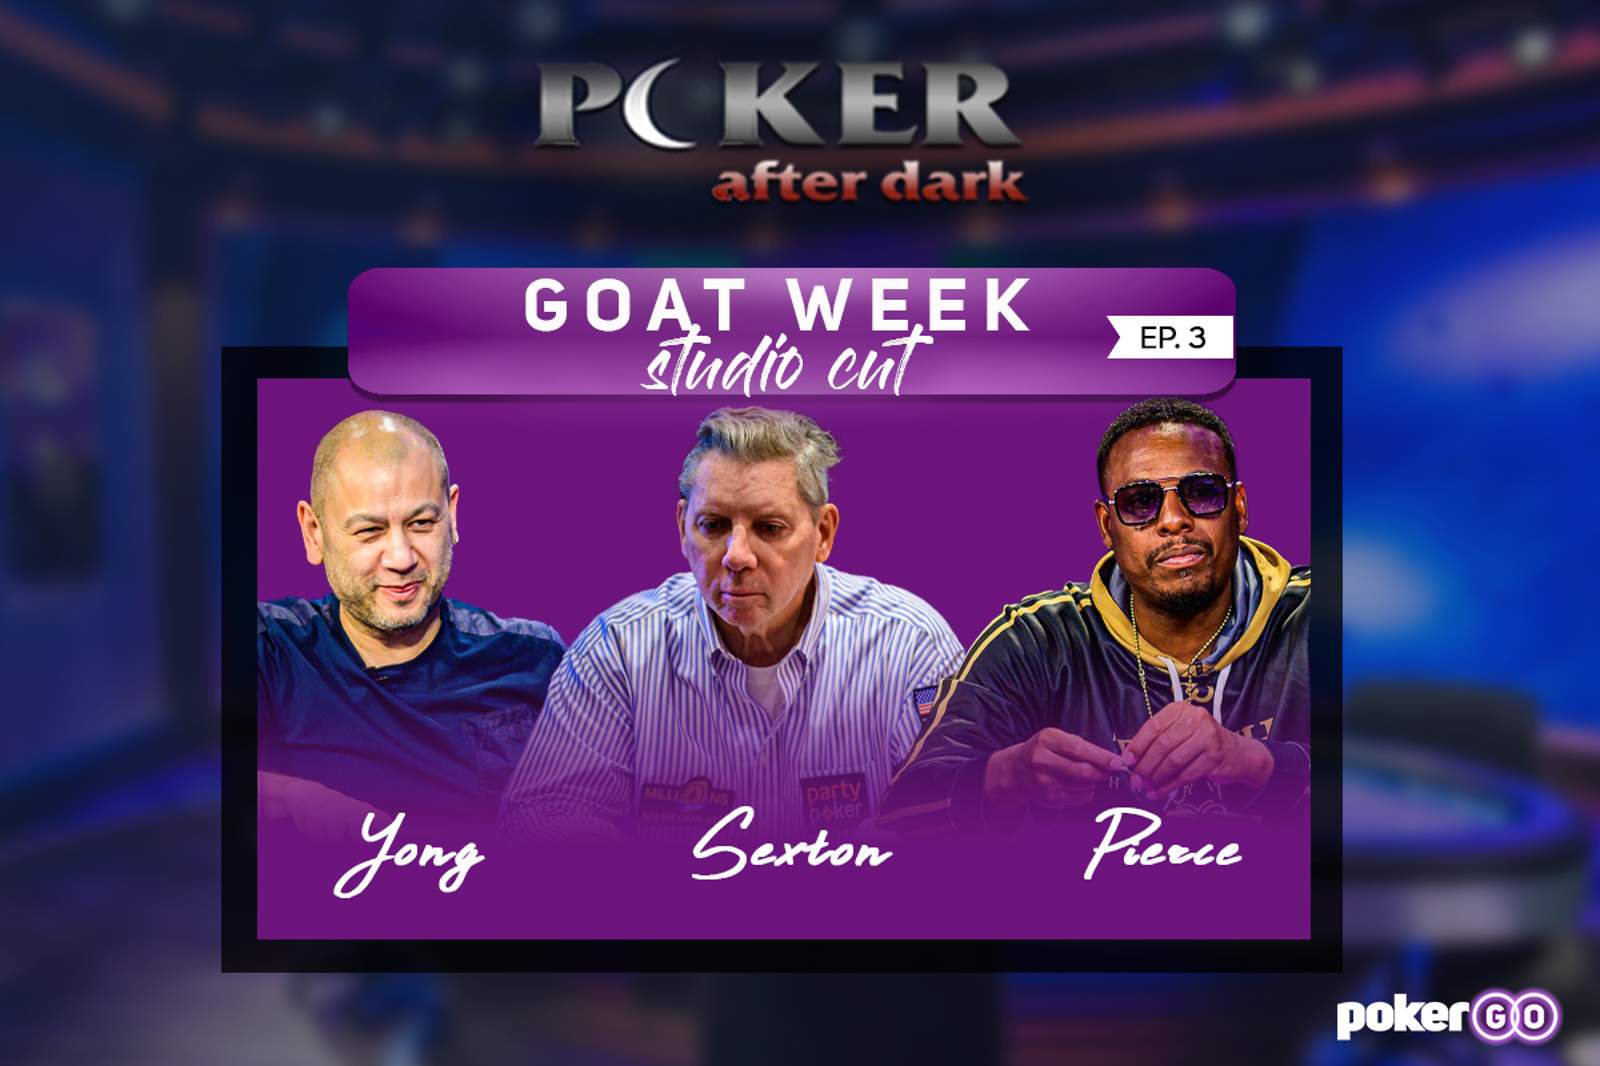 Poker After Dark Studio Cut Episode 3 on Tonight at 9 p.m. ET